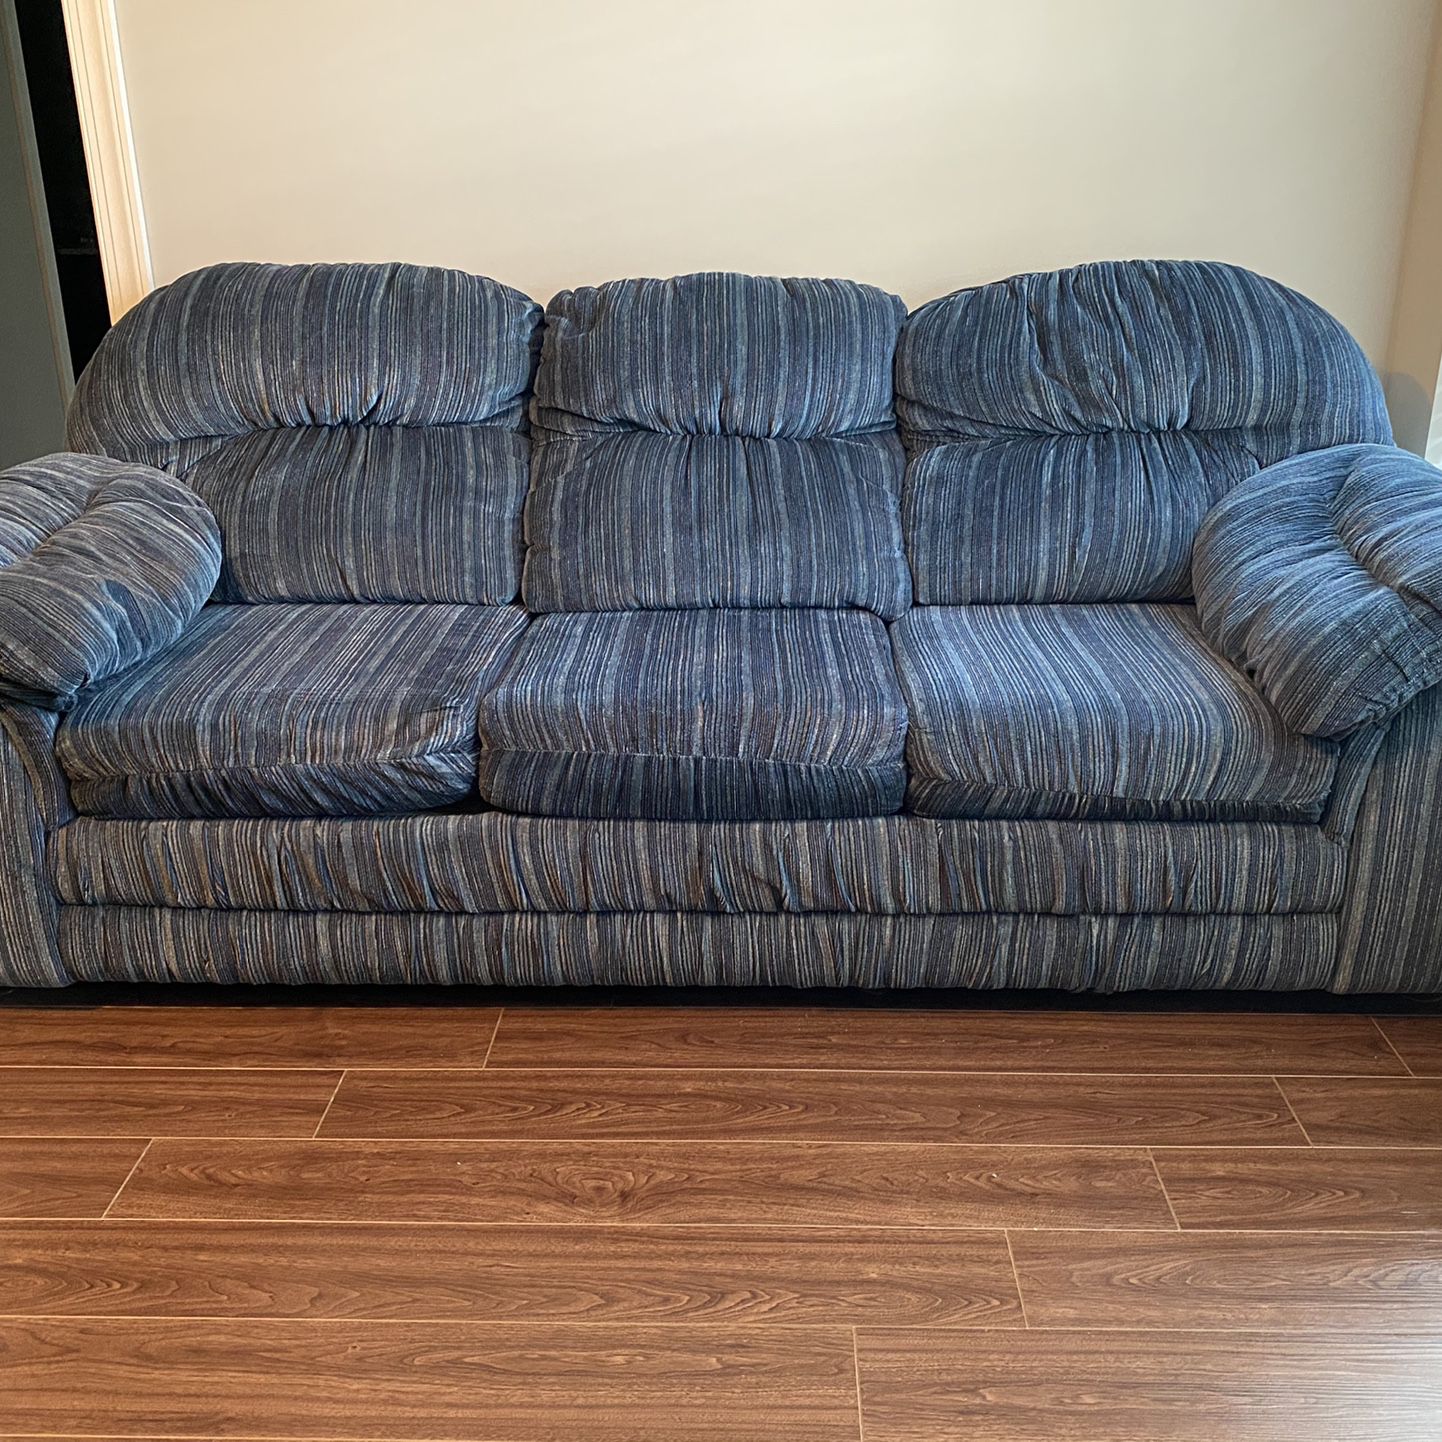 Navy Blue Sofa